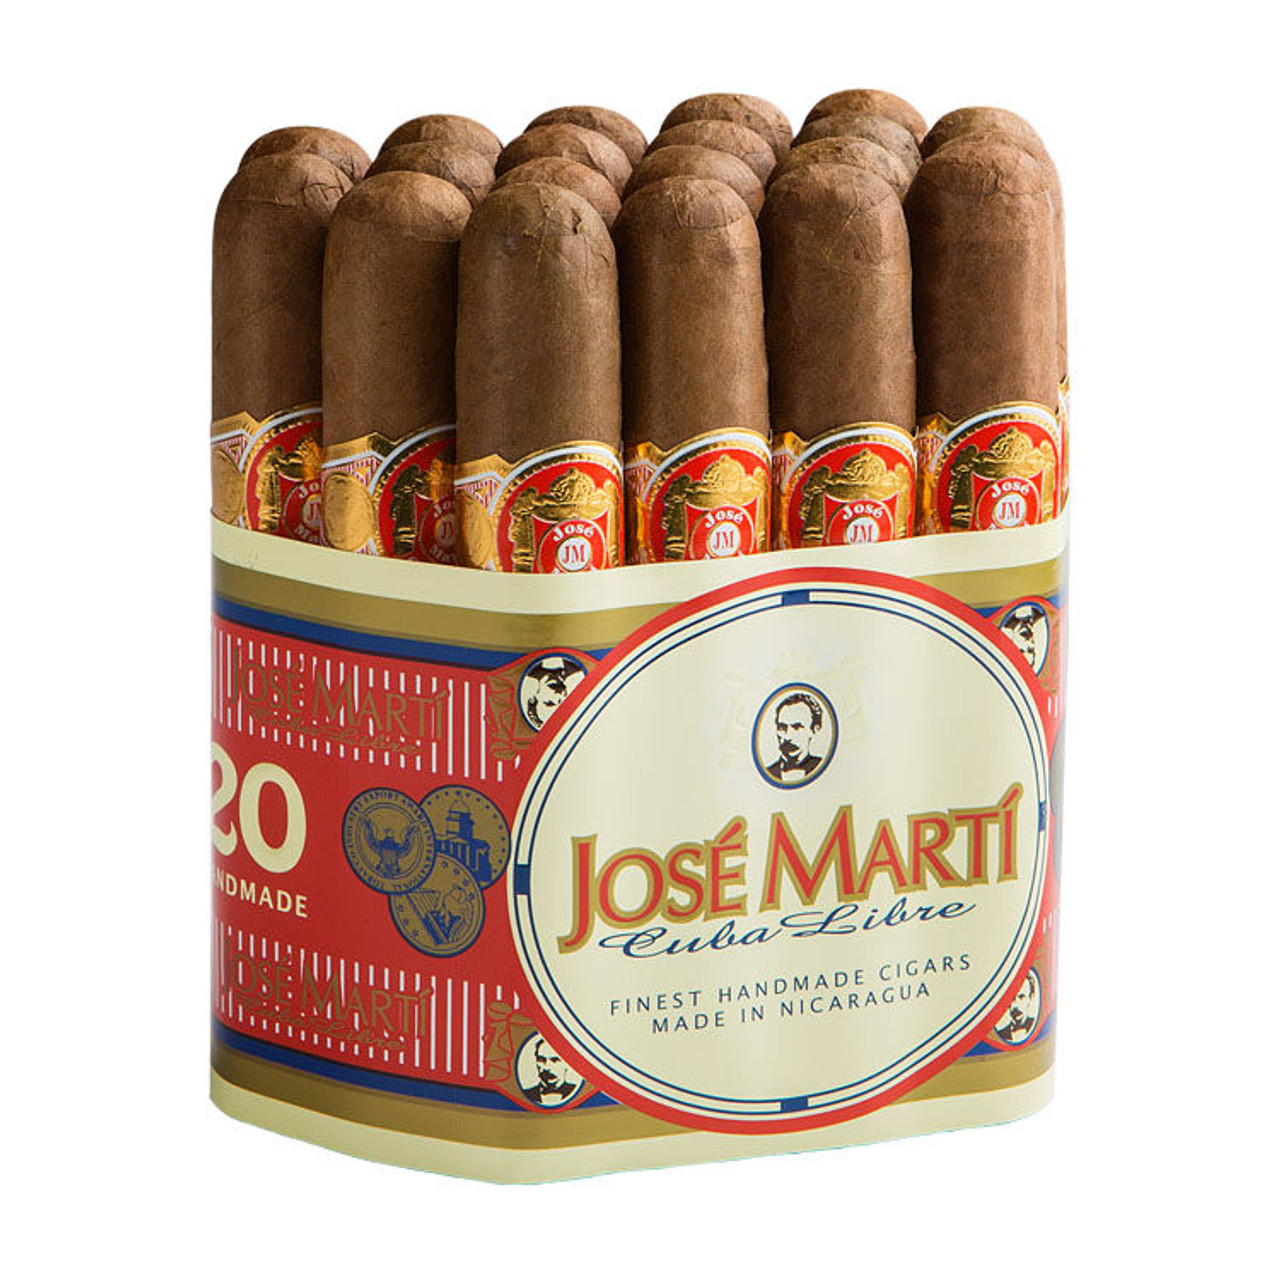 Jose Marti 6 x 60 Bundle Cigars - 6 x 60 (Bundle of 20) *Box